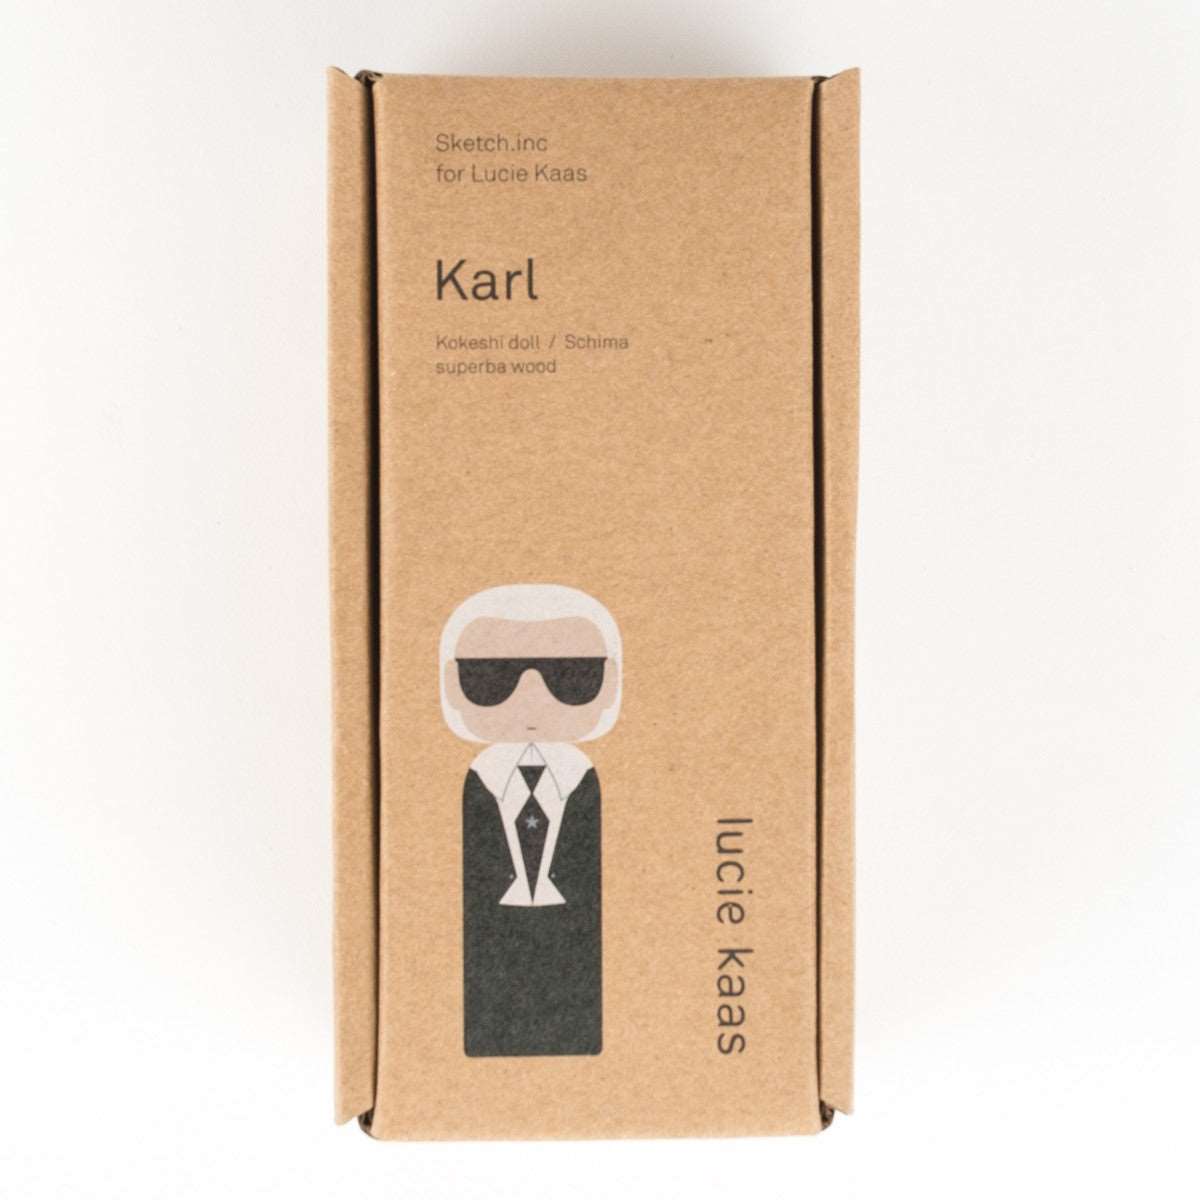 Lucie Kaas Sketch Inc Kokeshi Doll Karl Lagerfeld | CIRCA75